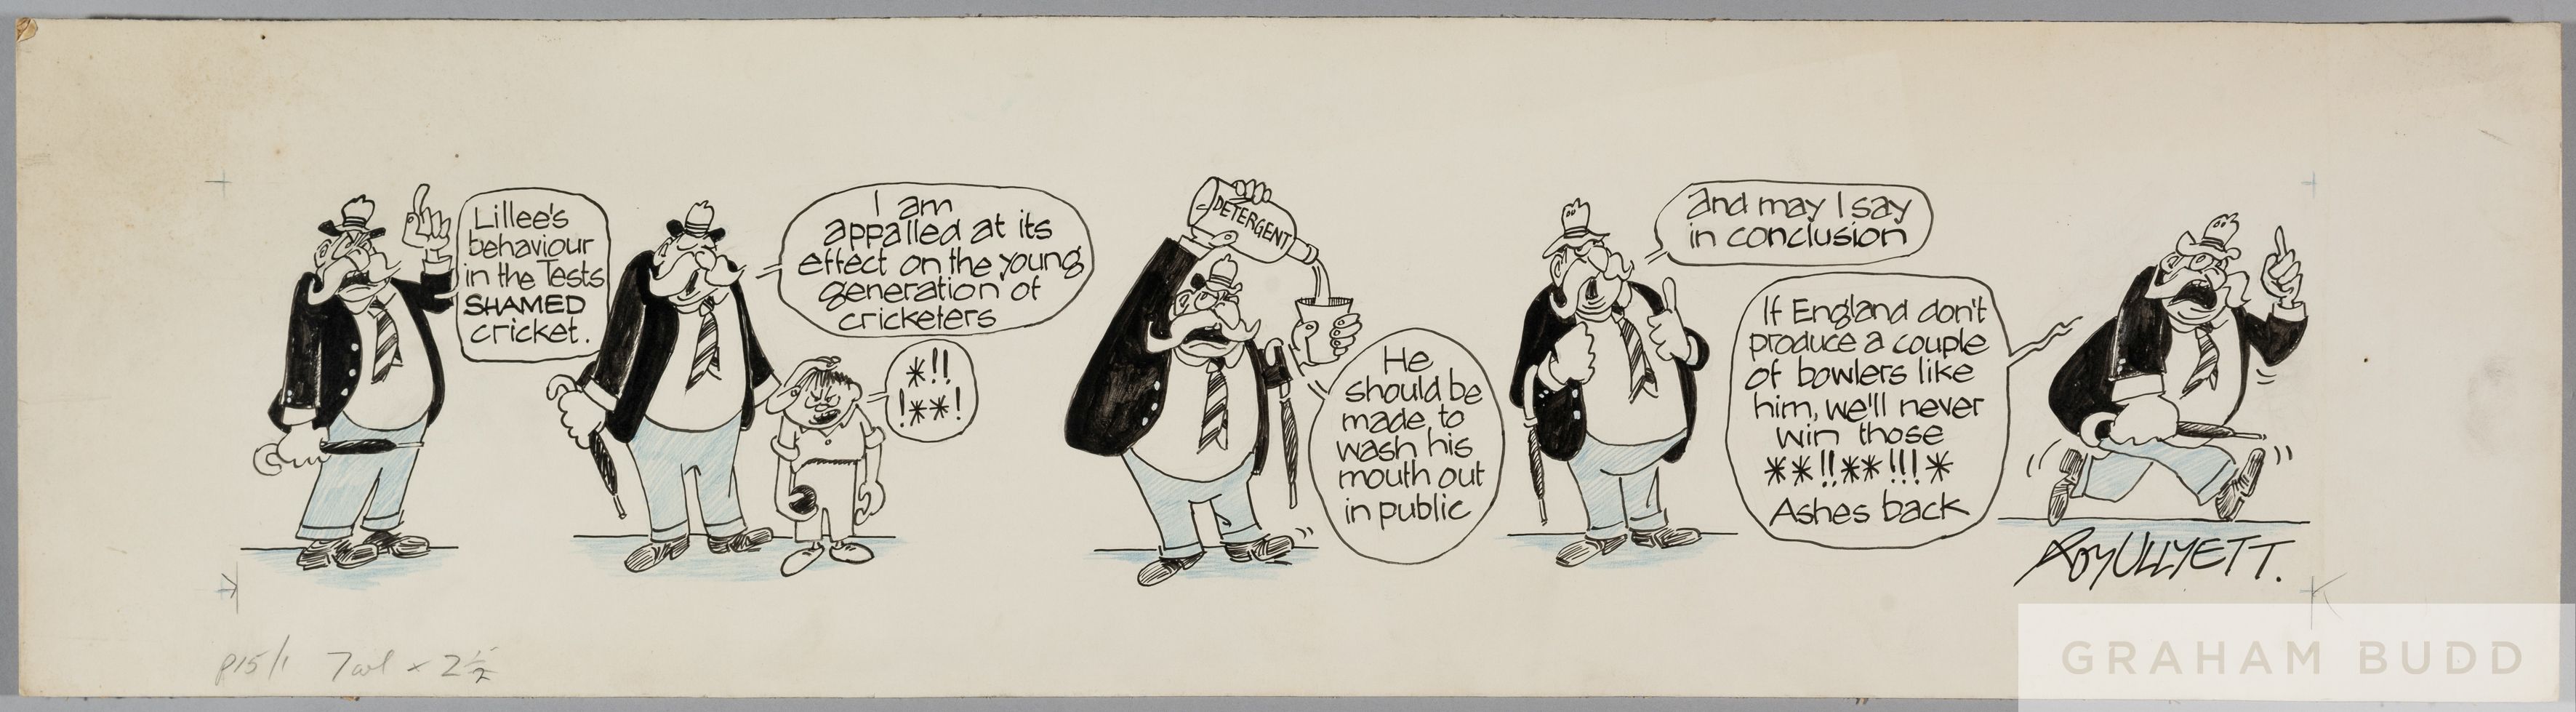 Roy Ullyett original artwork for newspaper cartoons